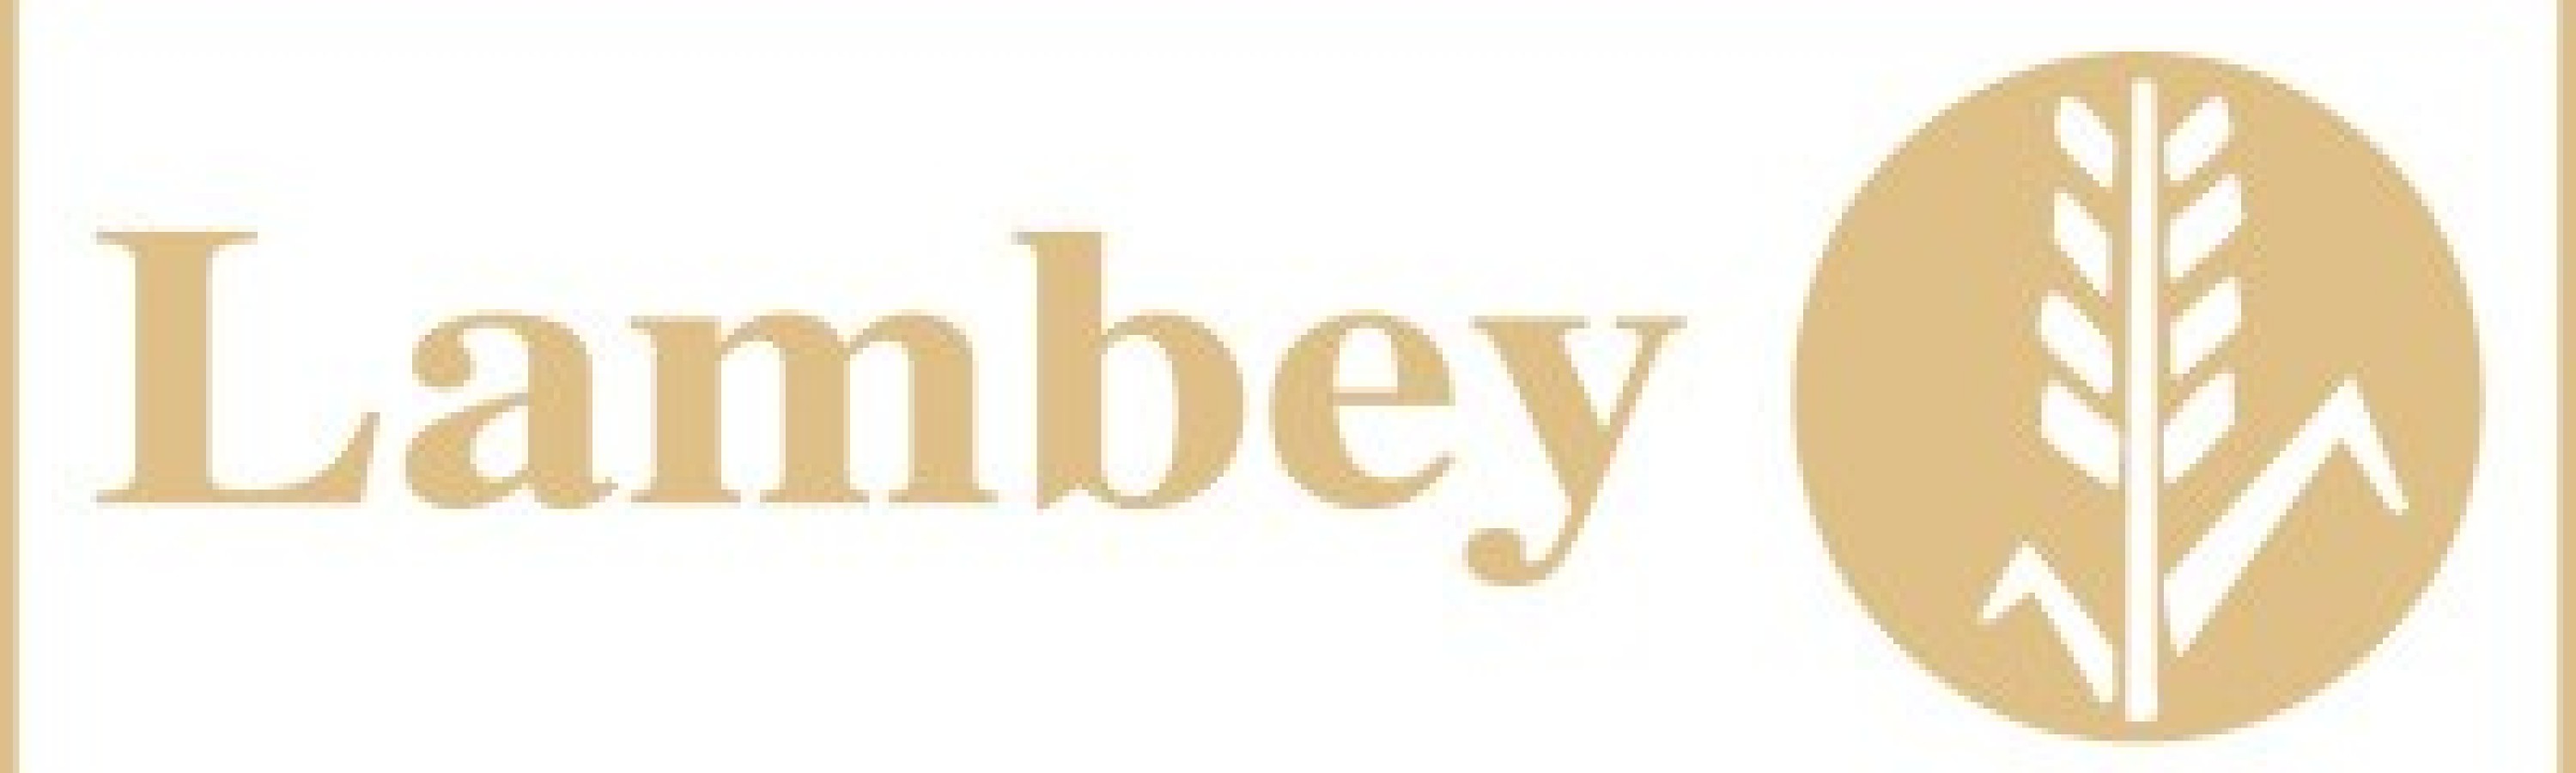 lambey-logo-1555668917